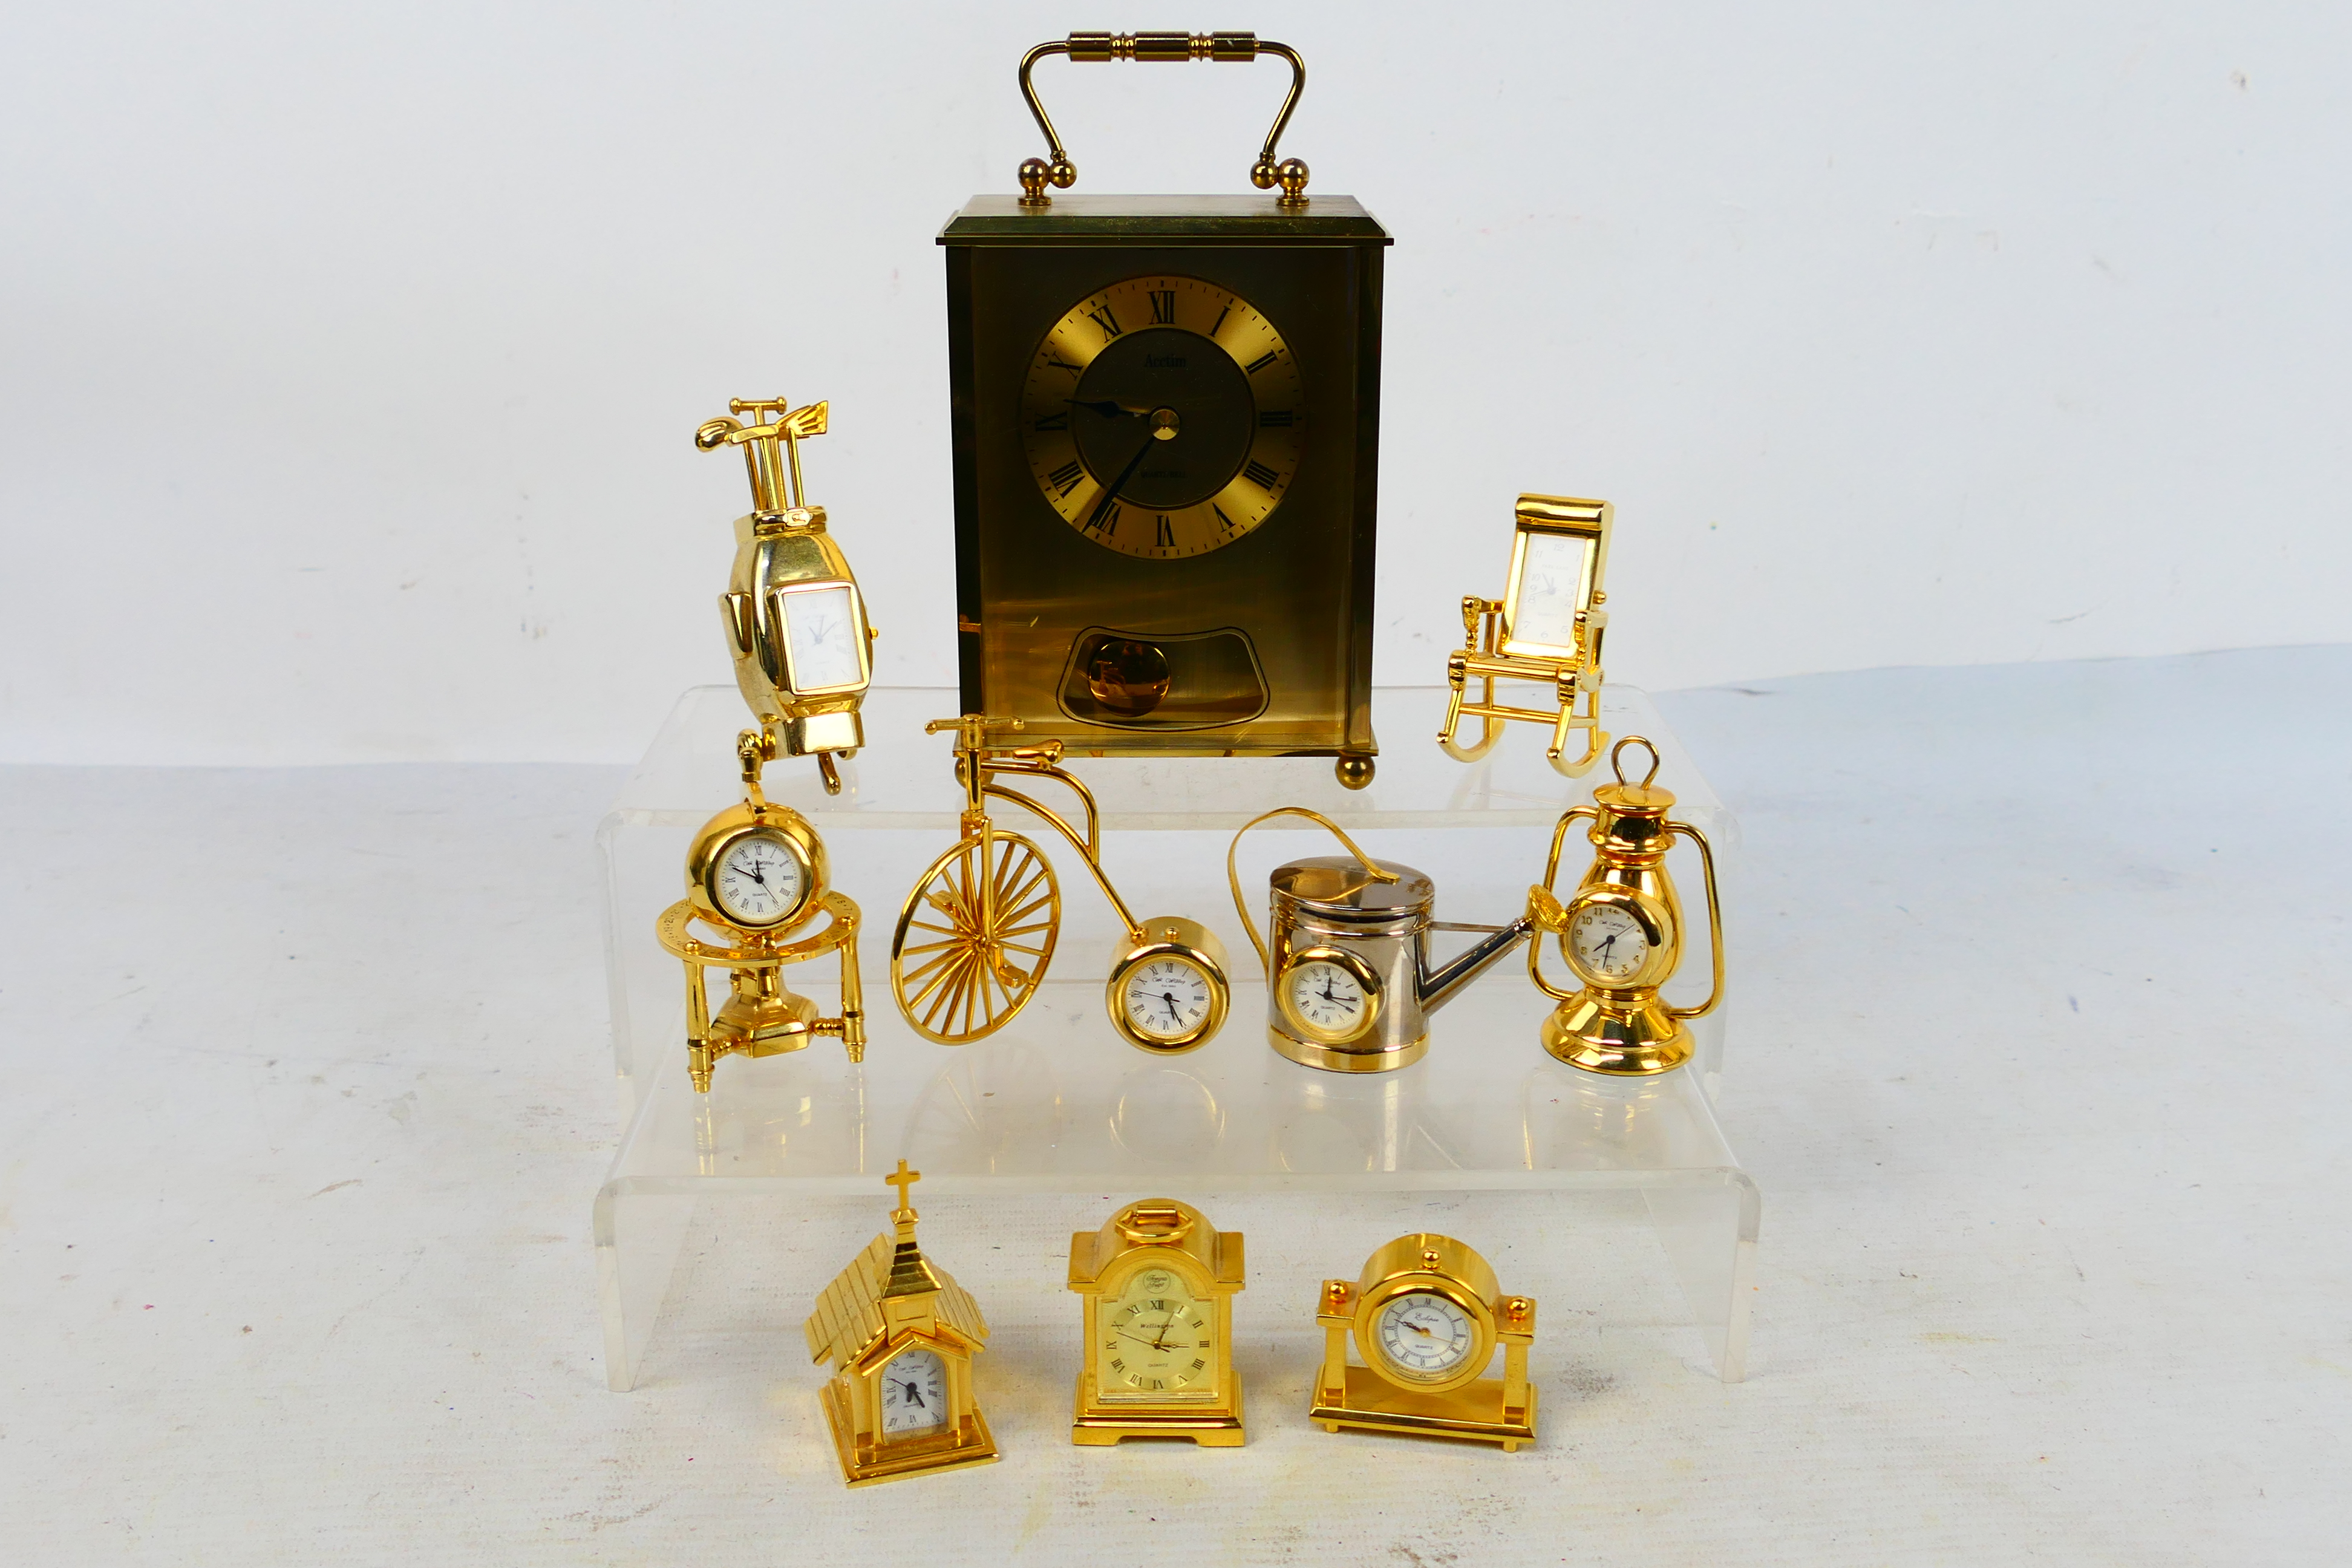 A collection of clocks, predominantly miniature novelty clocks.